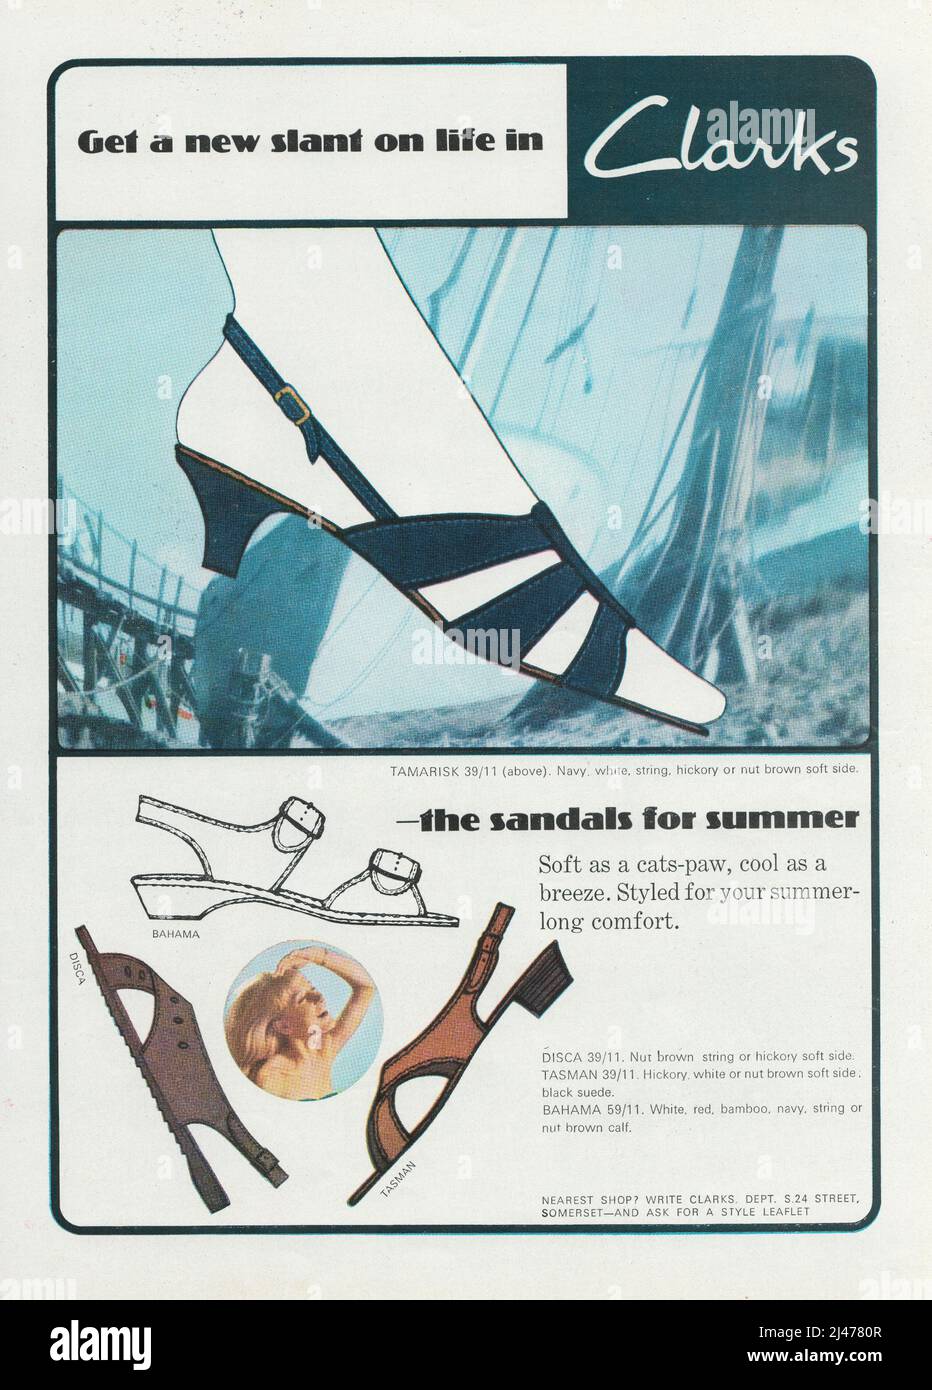 Clarks sandals clarks ladies shoes clarks shoes for summer advertisement  advert 1960s vintage advert Stock Photo - Alamy